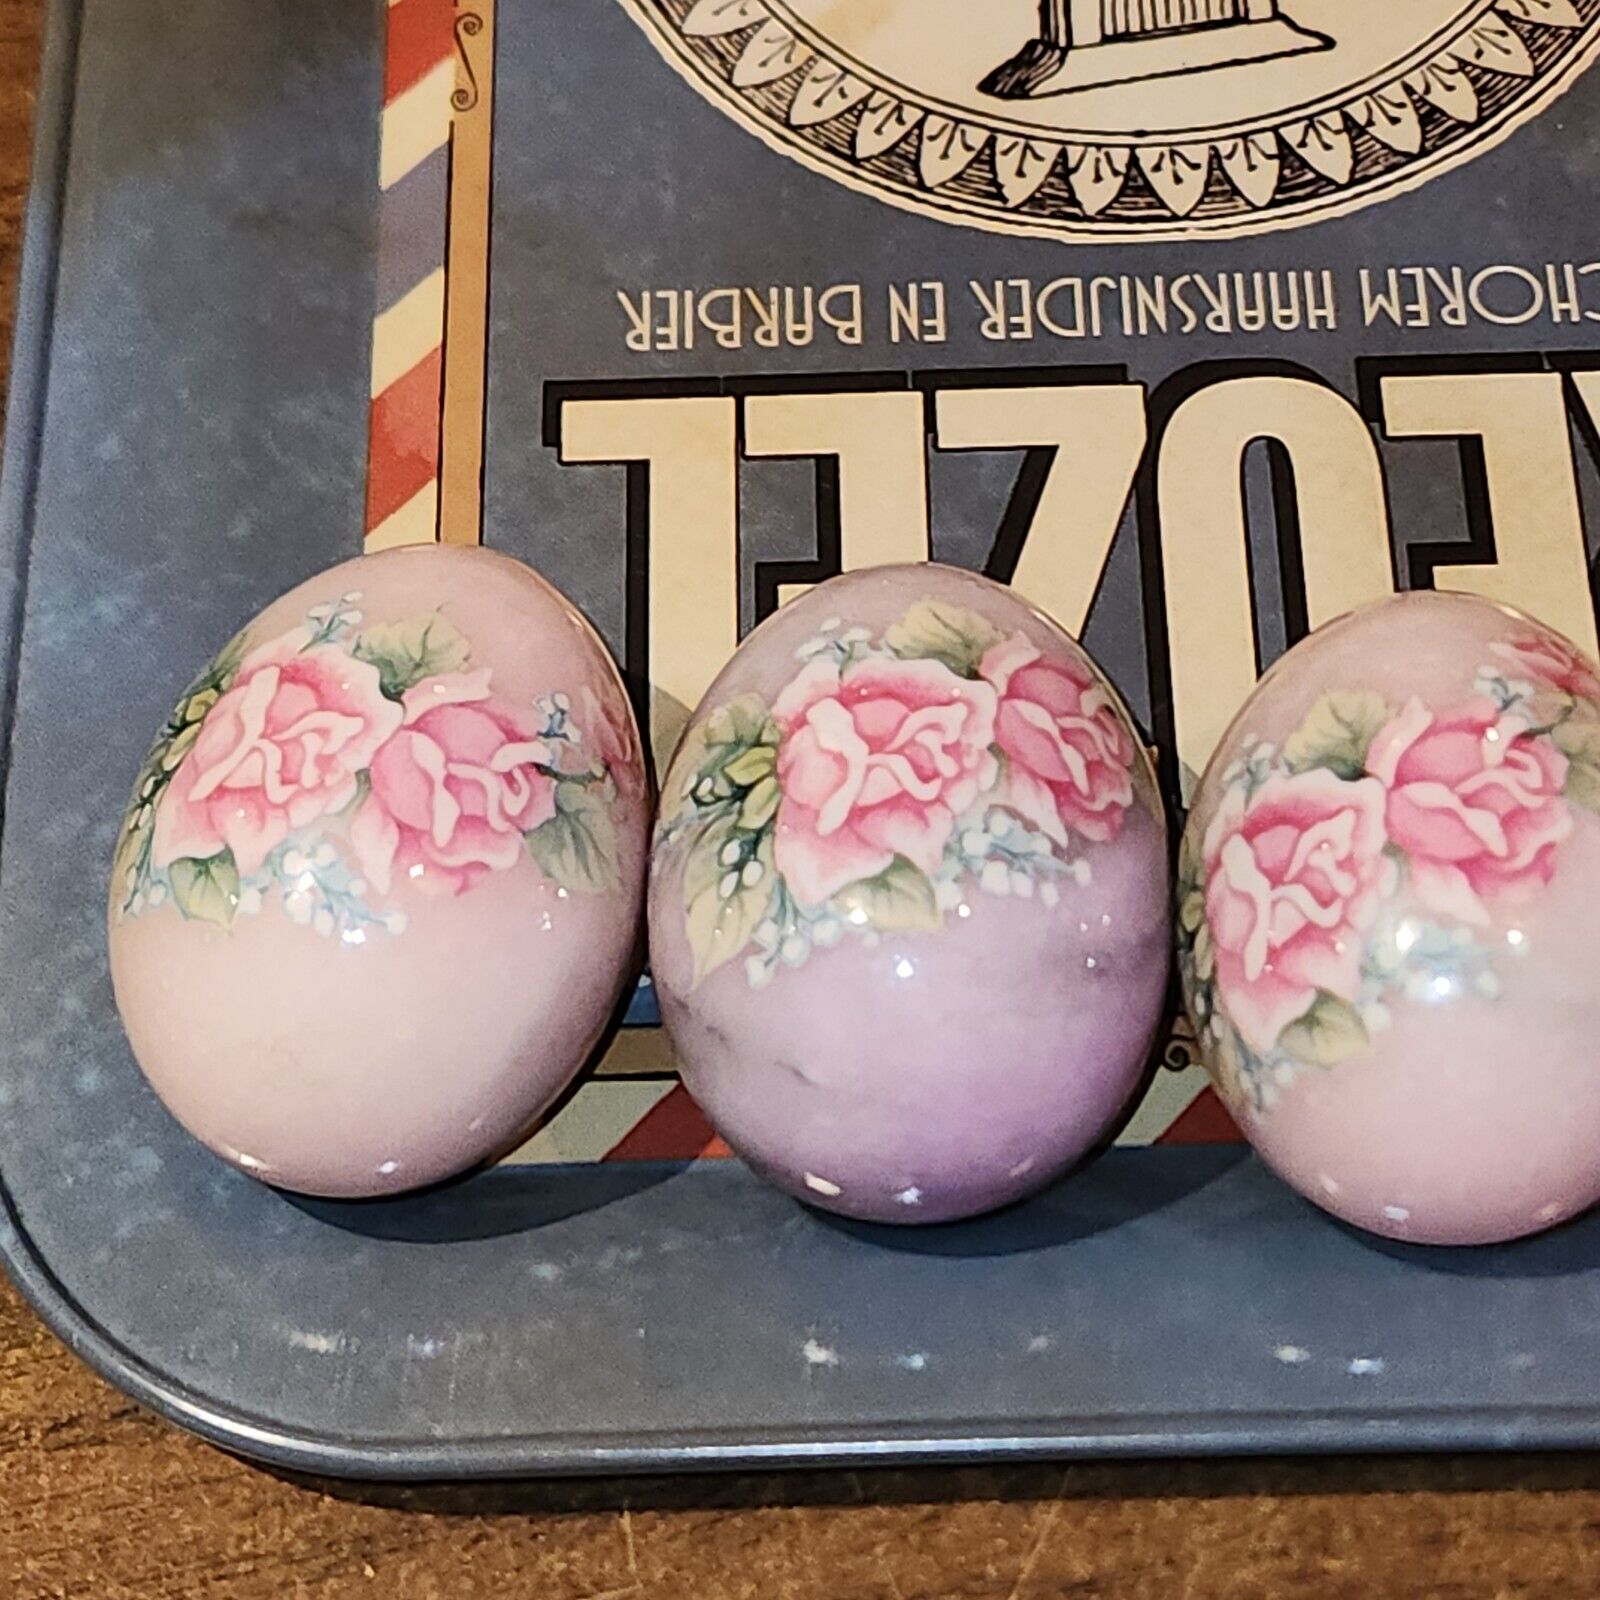 Lot of 3 Vintage Marble Eggs, pinks & purples